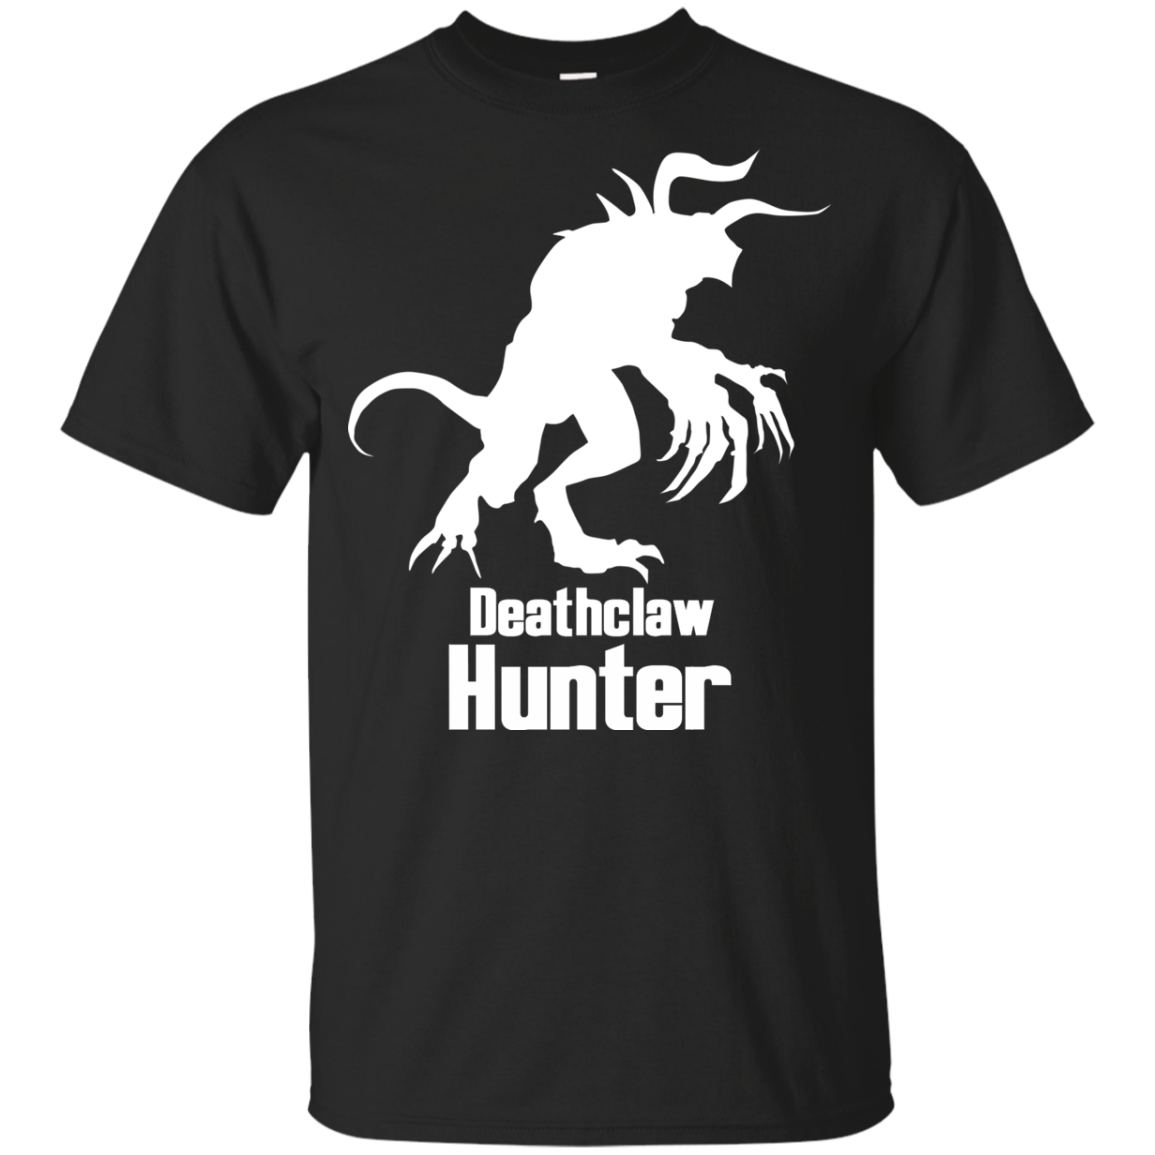 Deathclaw Hunter Shirt